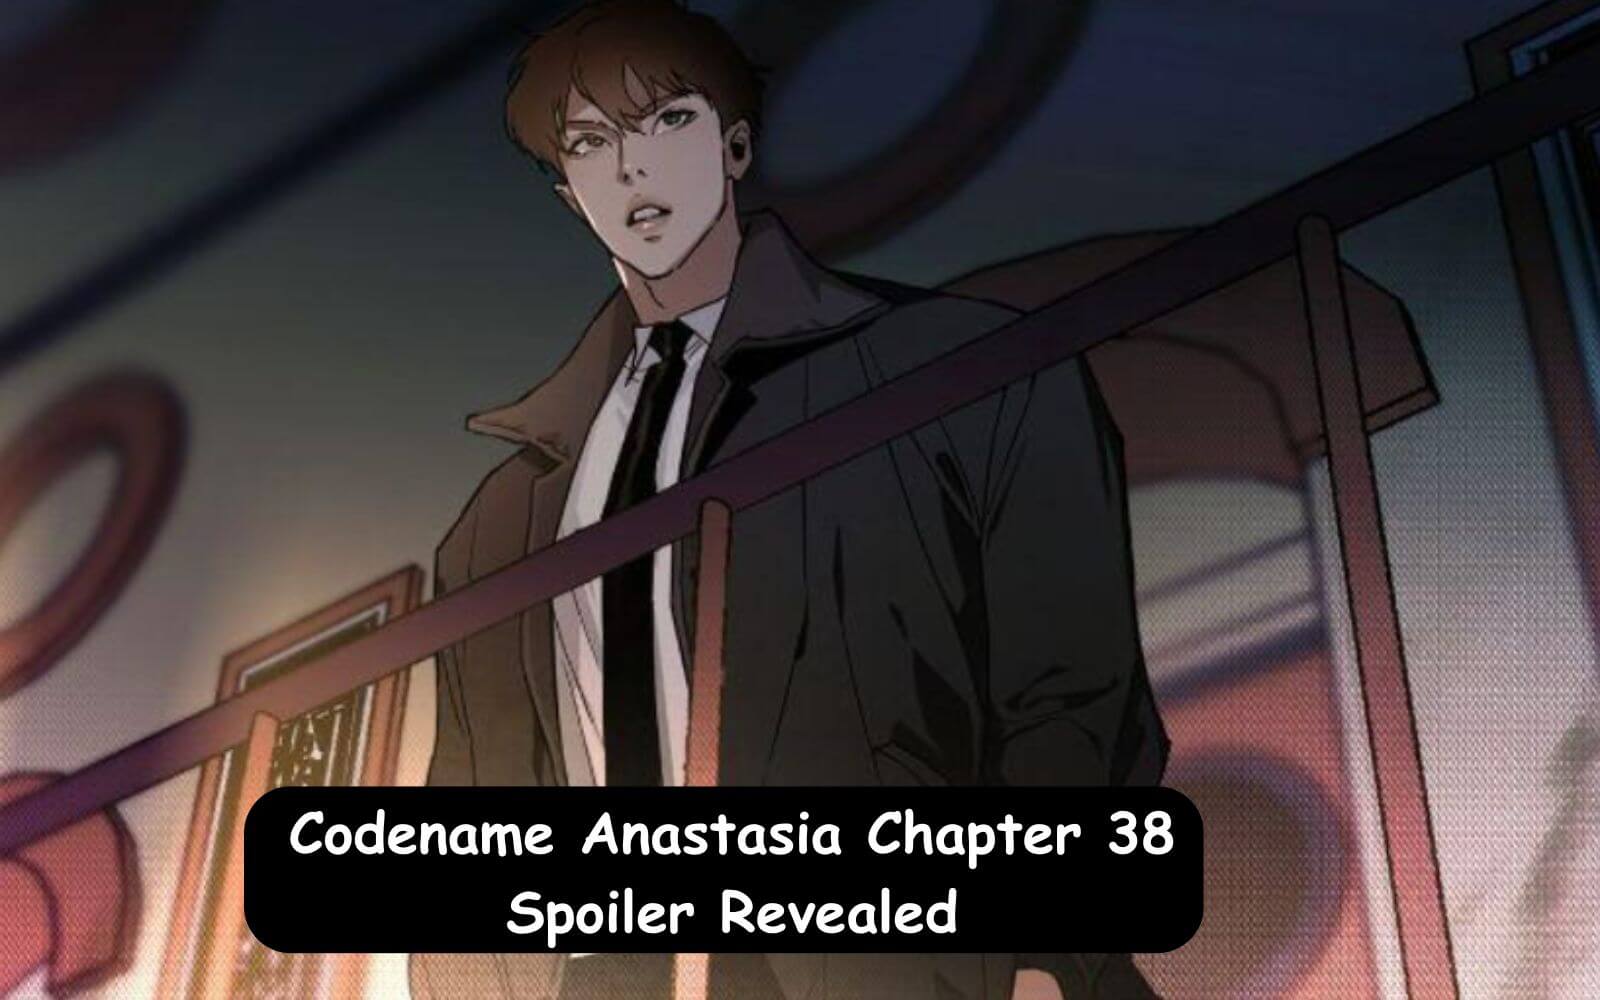 Codename Anastasia Chapter 38 Spoiler Revealed